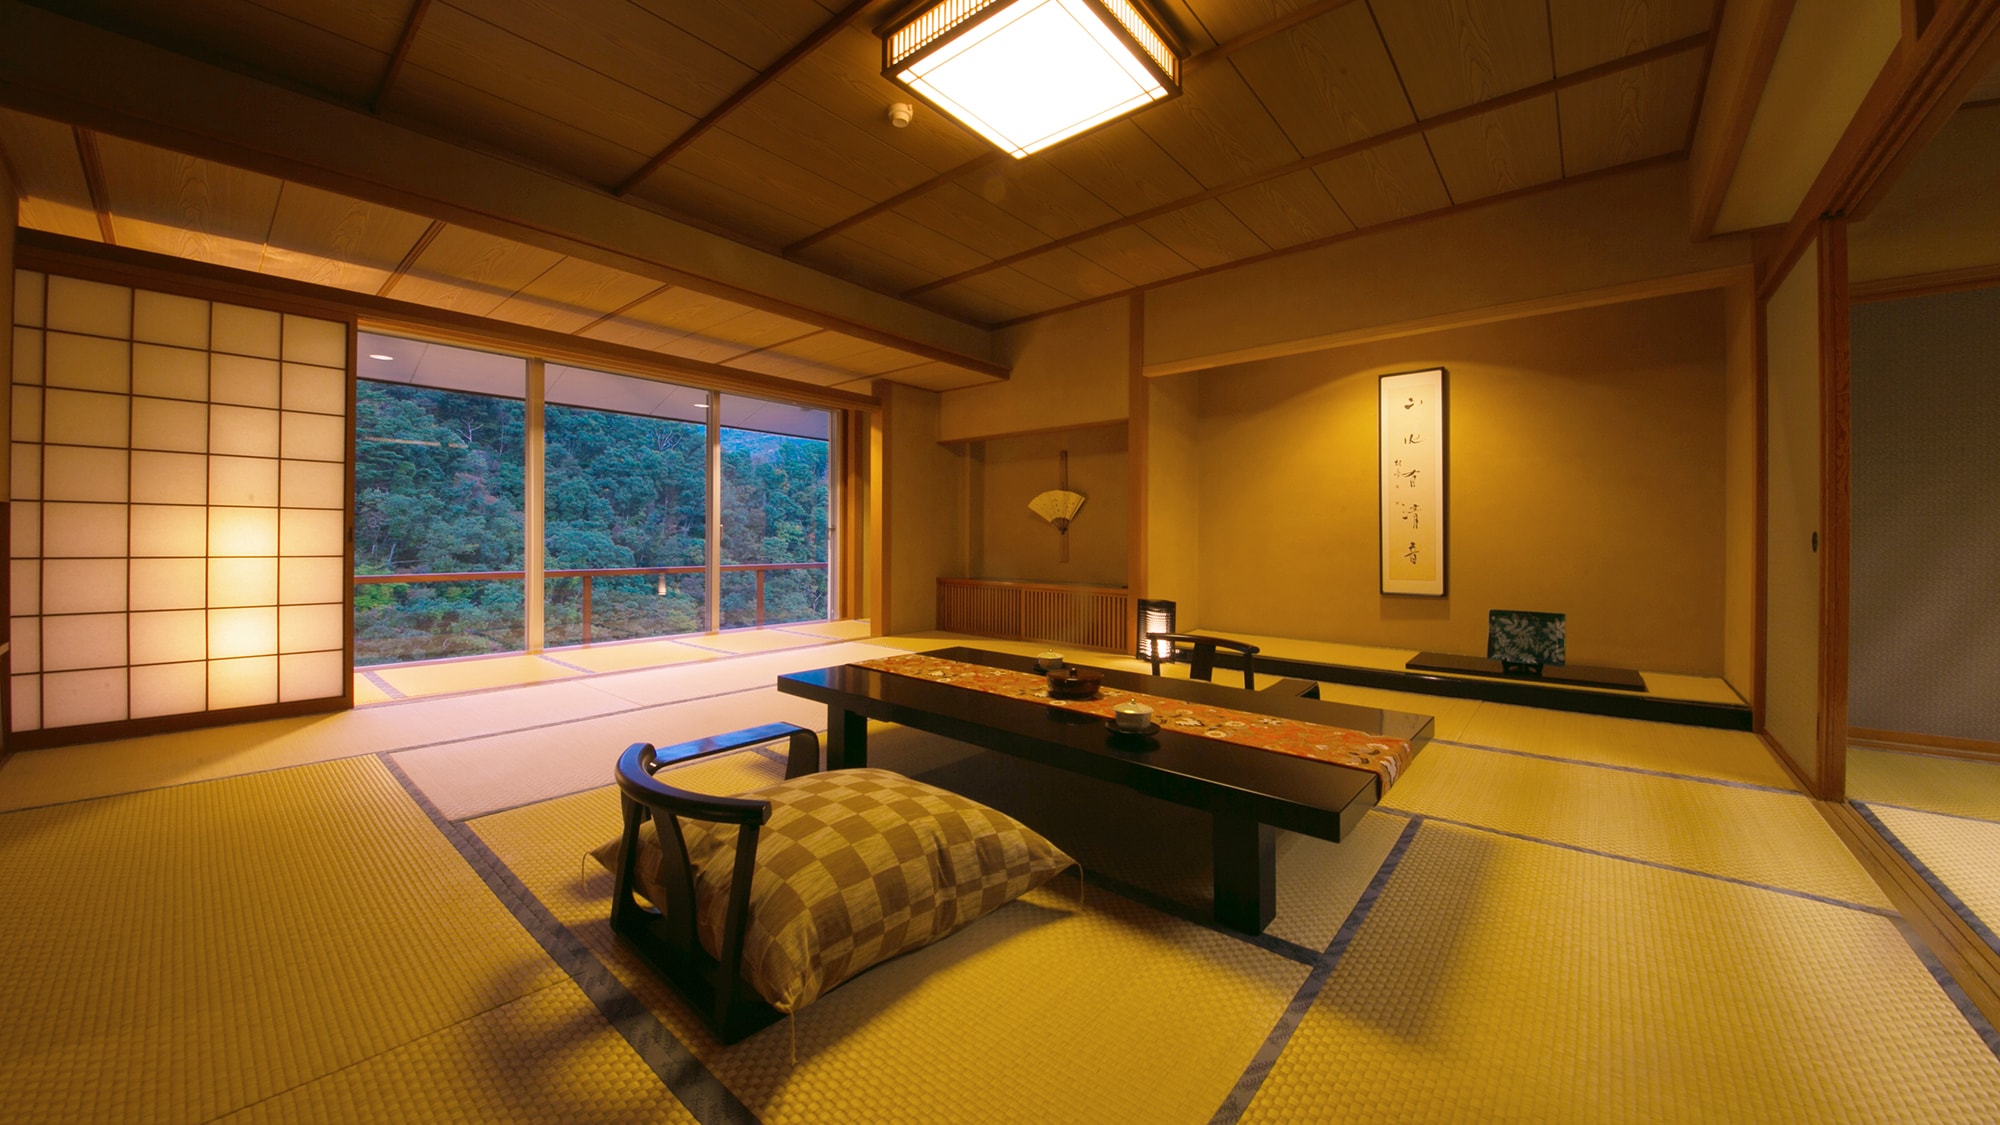 [Kamar Tamu] Kamar elegan yang dapat menampung hingga 8 orang. Perabotan dan pengaturannya juga sangat elegan.